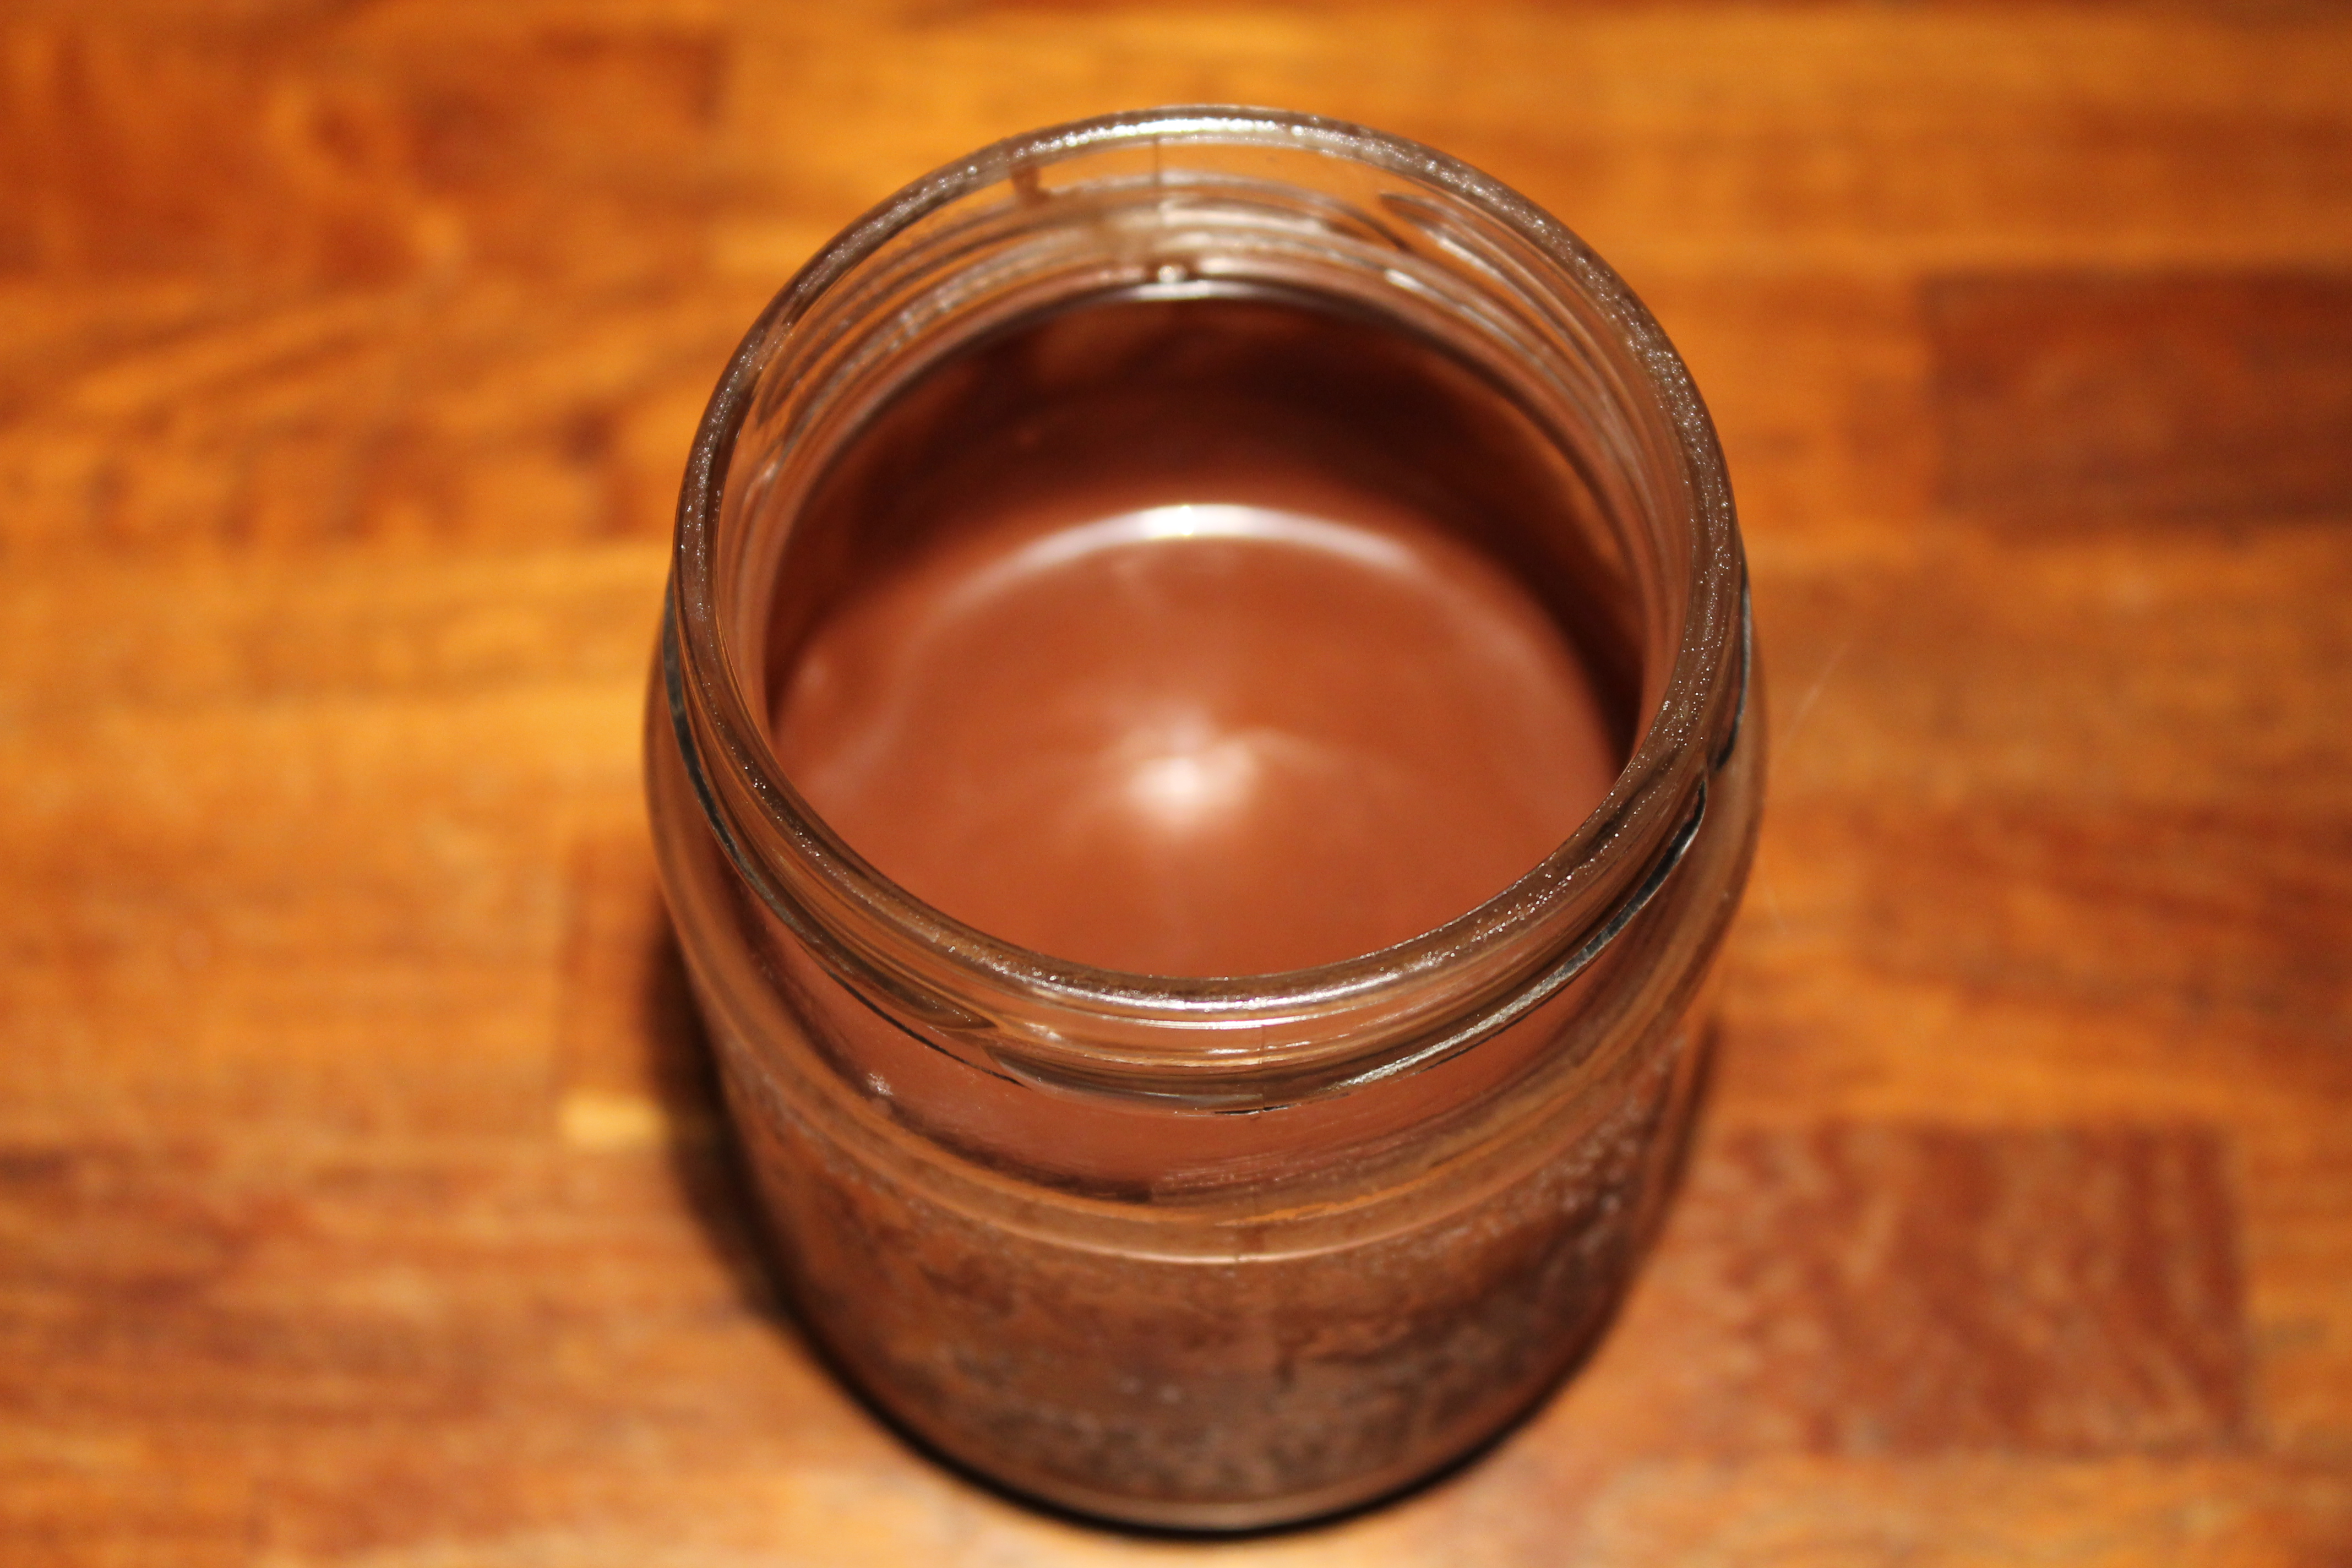 VIADELICE - Pâte à tartiner cacao-noisette (texture)